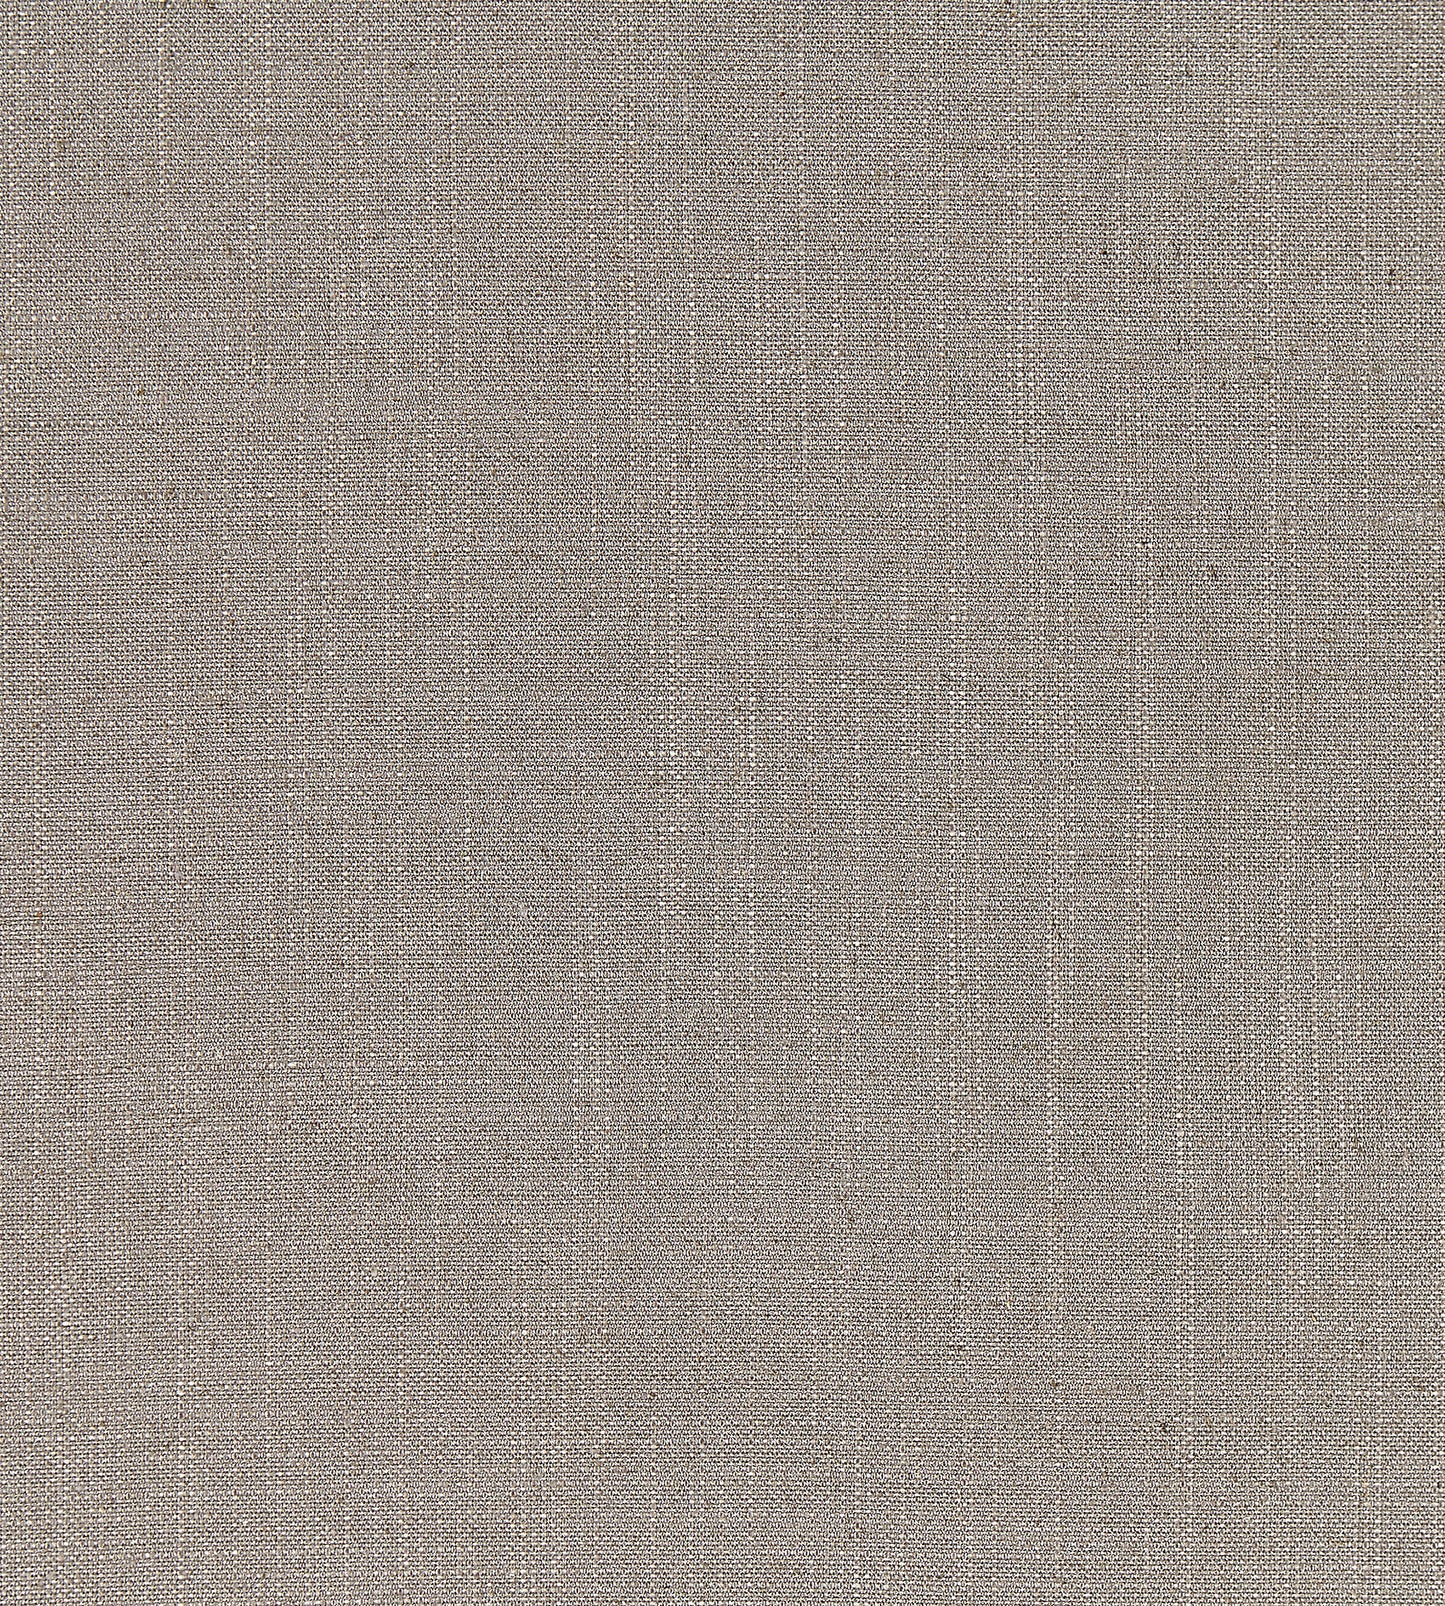 Purchase Boris Kroll Fabric Item# SC 0007K65106, Hampton Weave Flannel 1